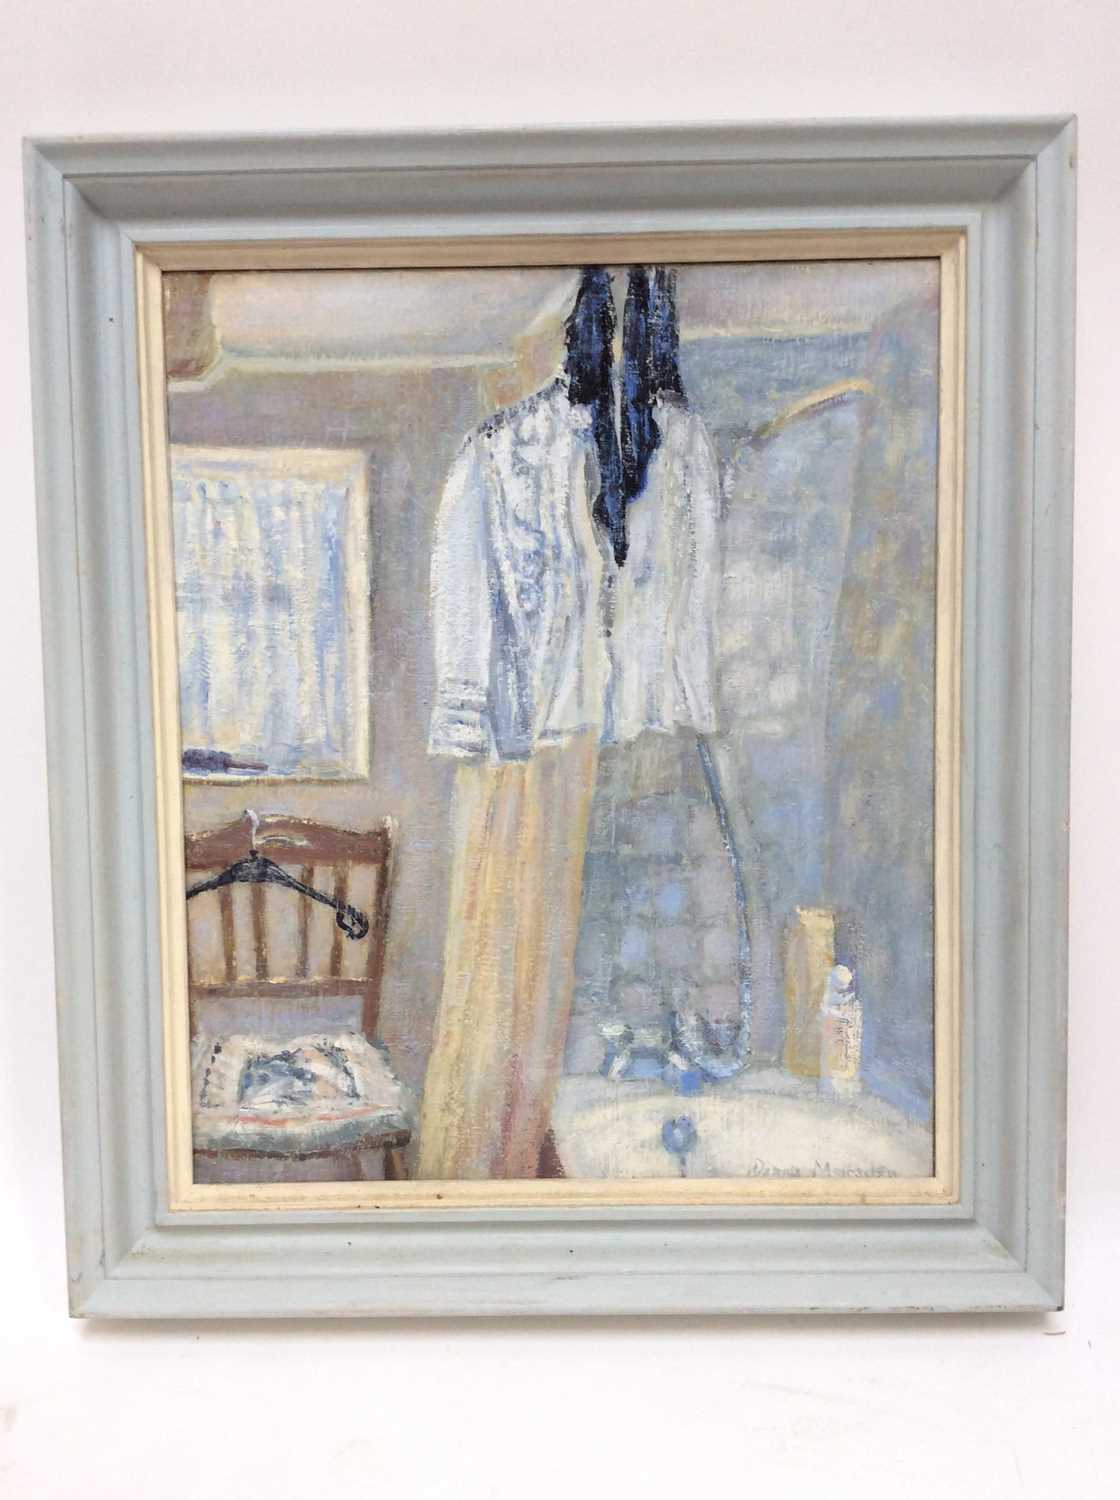 Lot 296 - Diana Marsden, contemporary, oil on canvas - Bathroom Interior, signed, 30cm x 25cm, framed